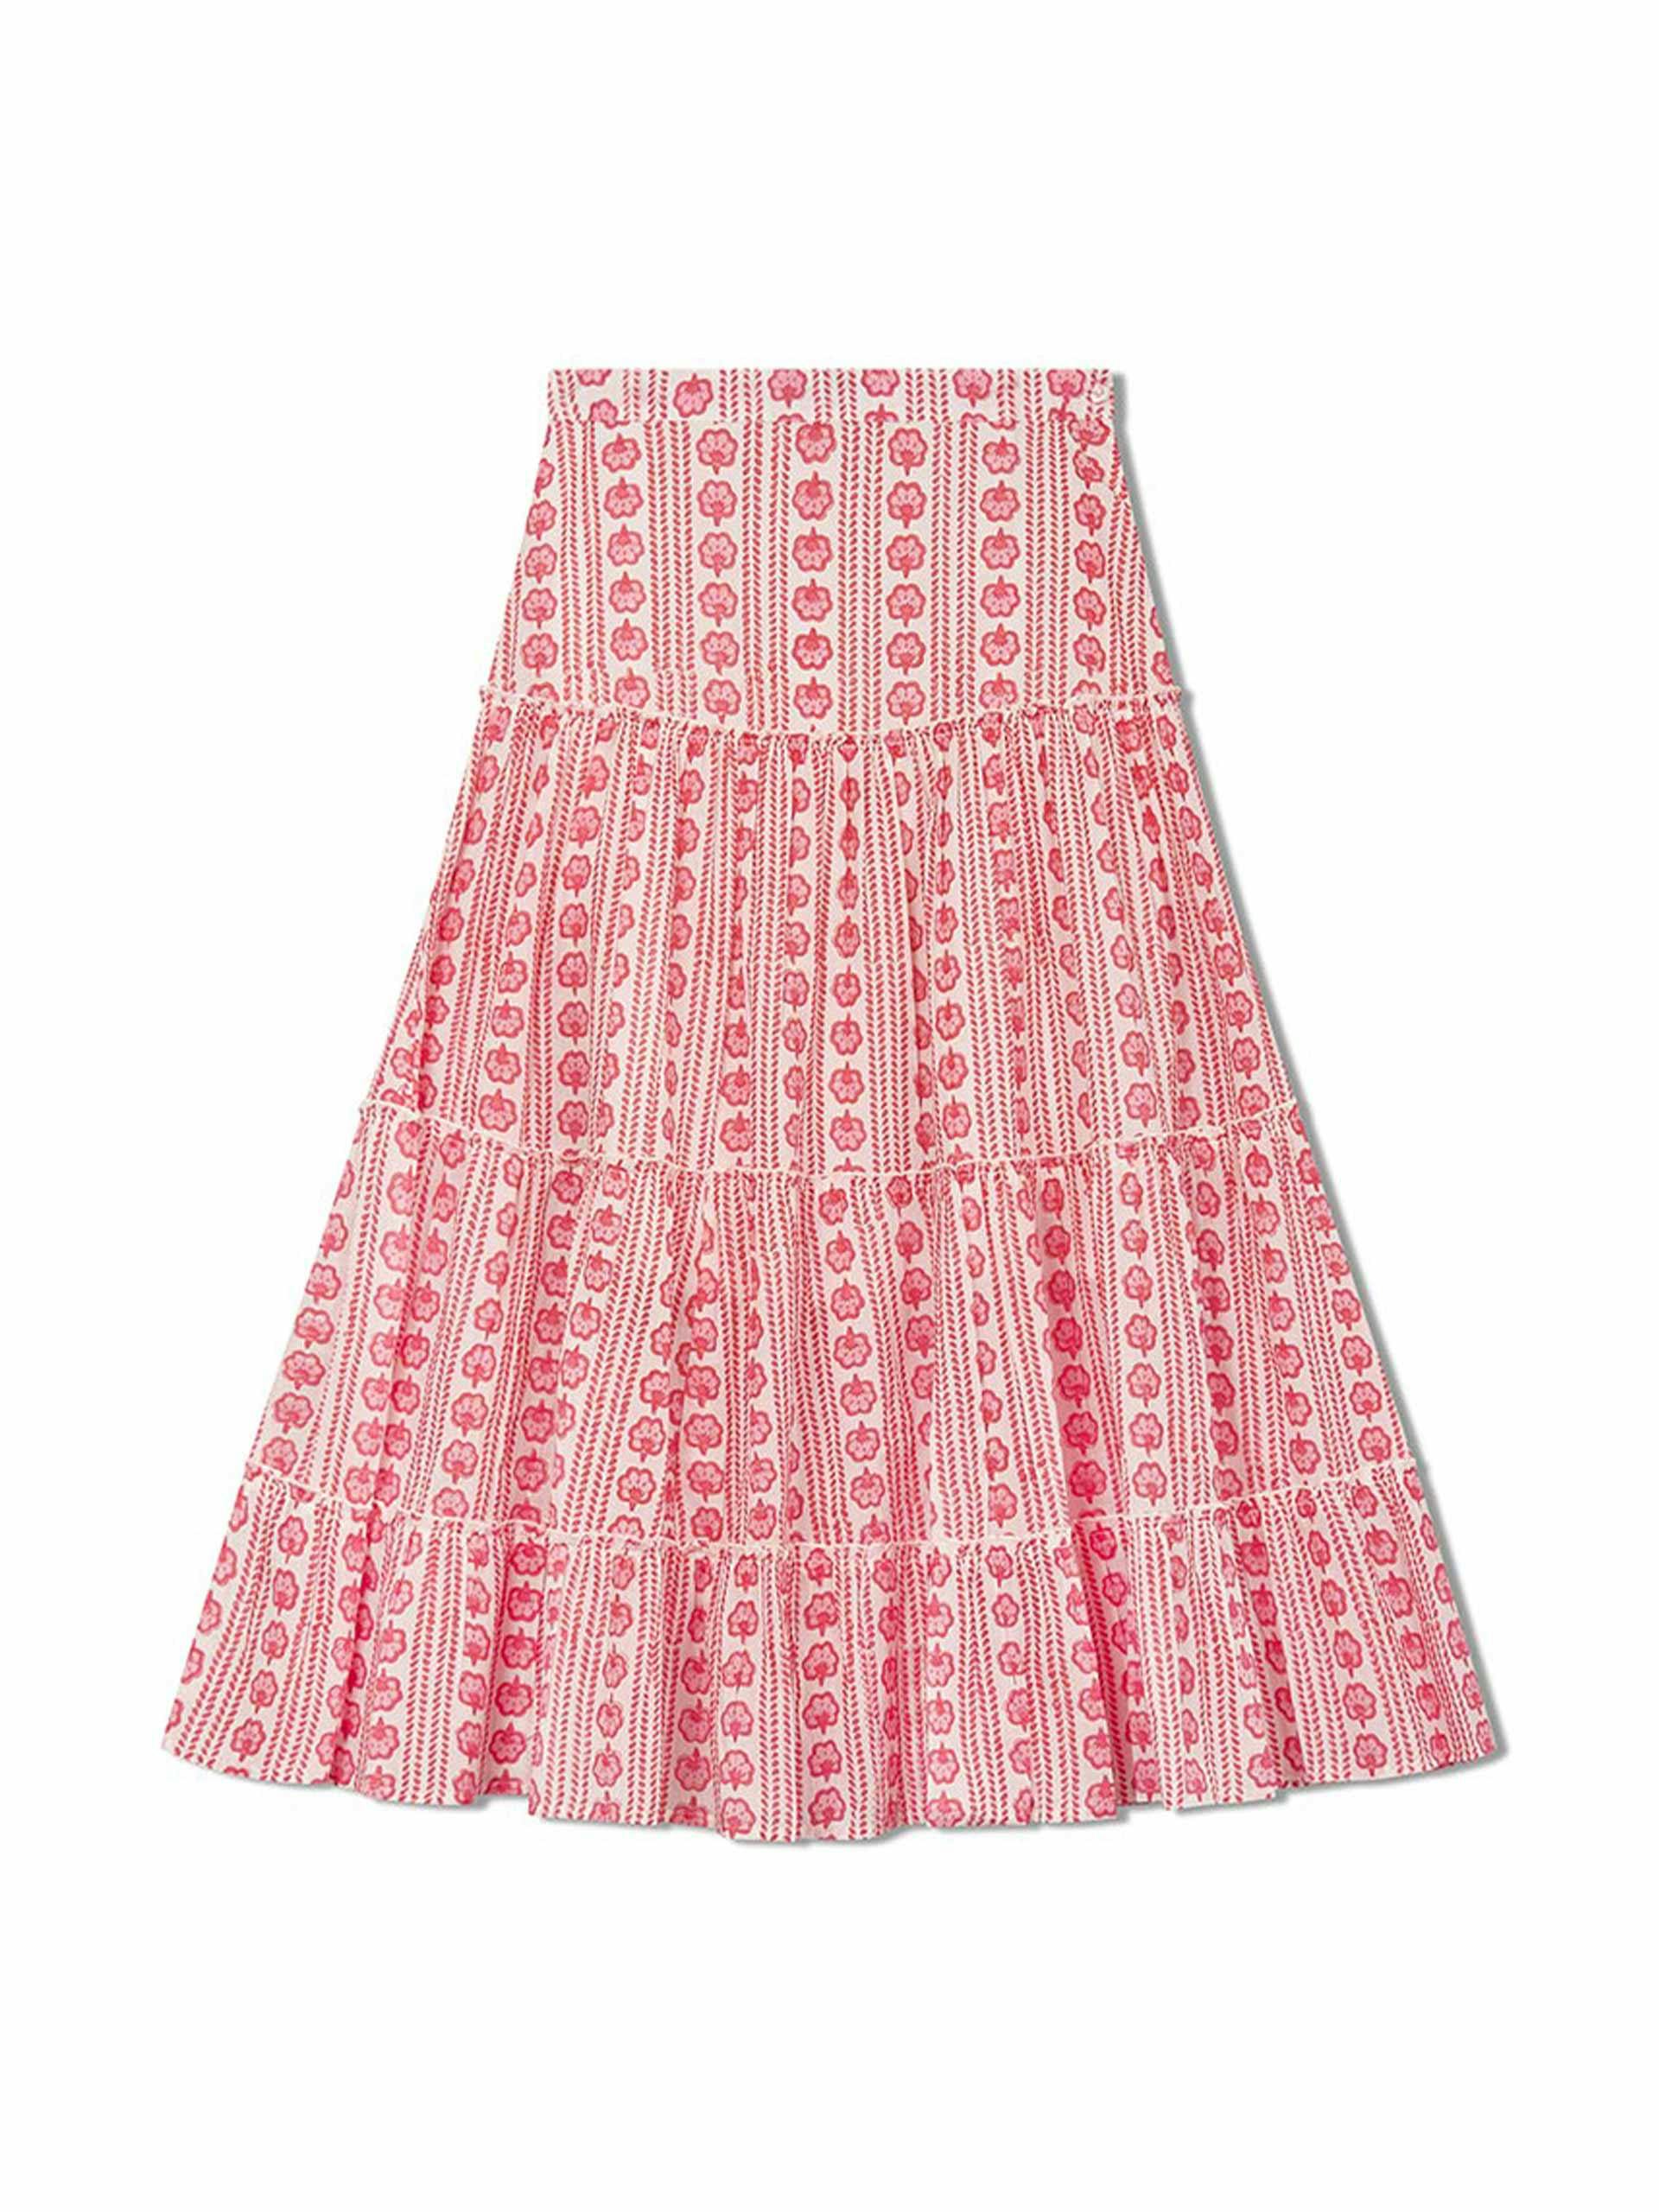 Pink printed cotton skirt